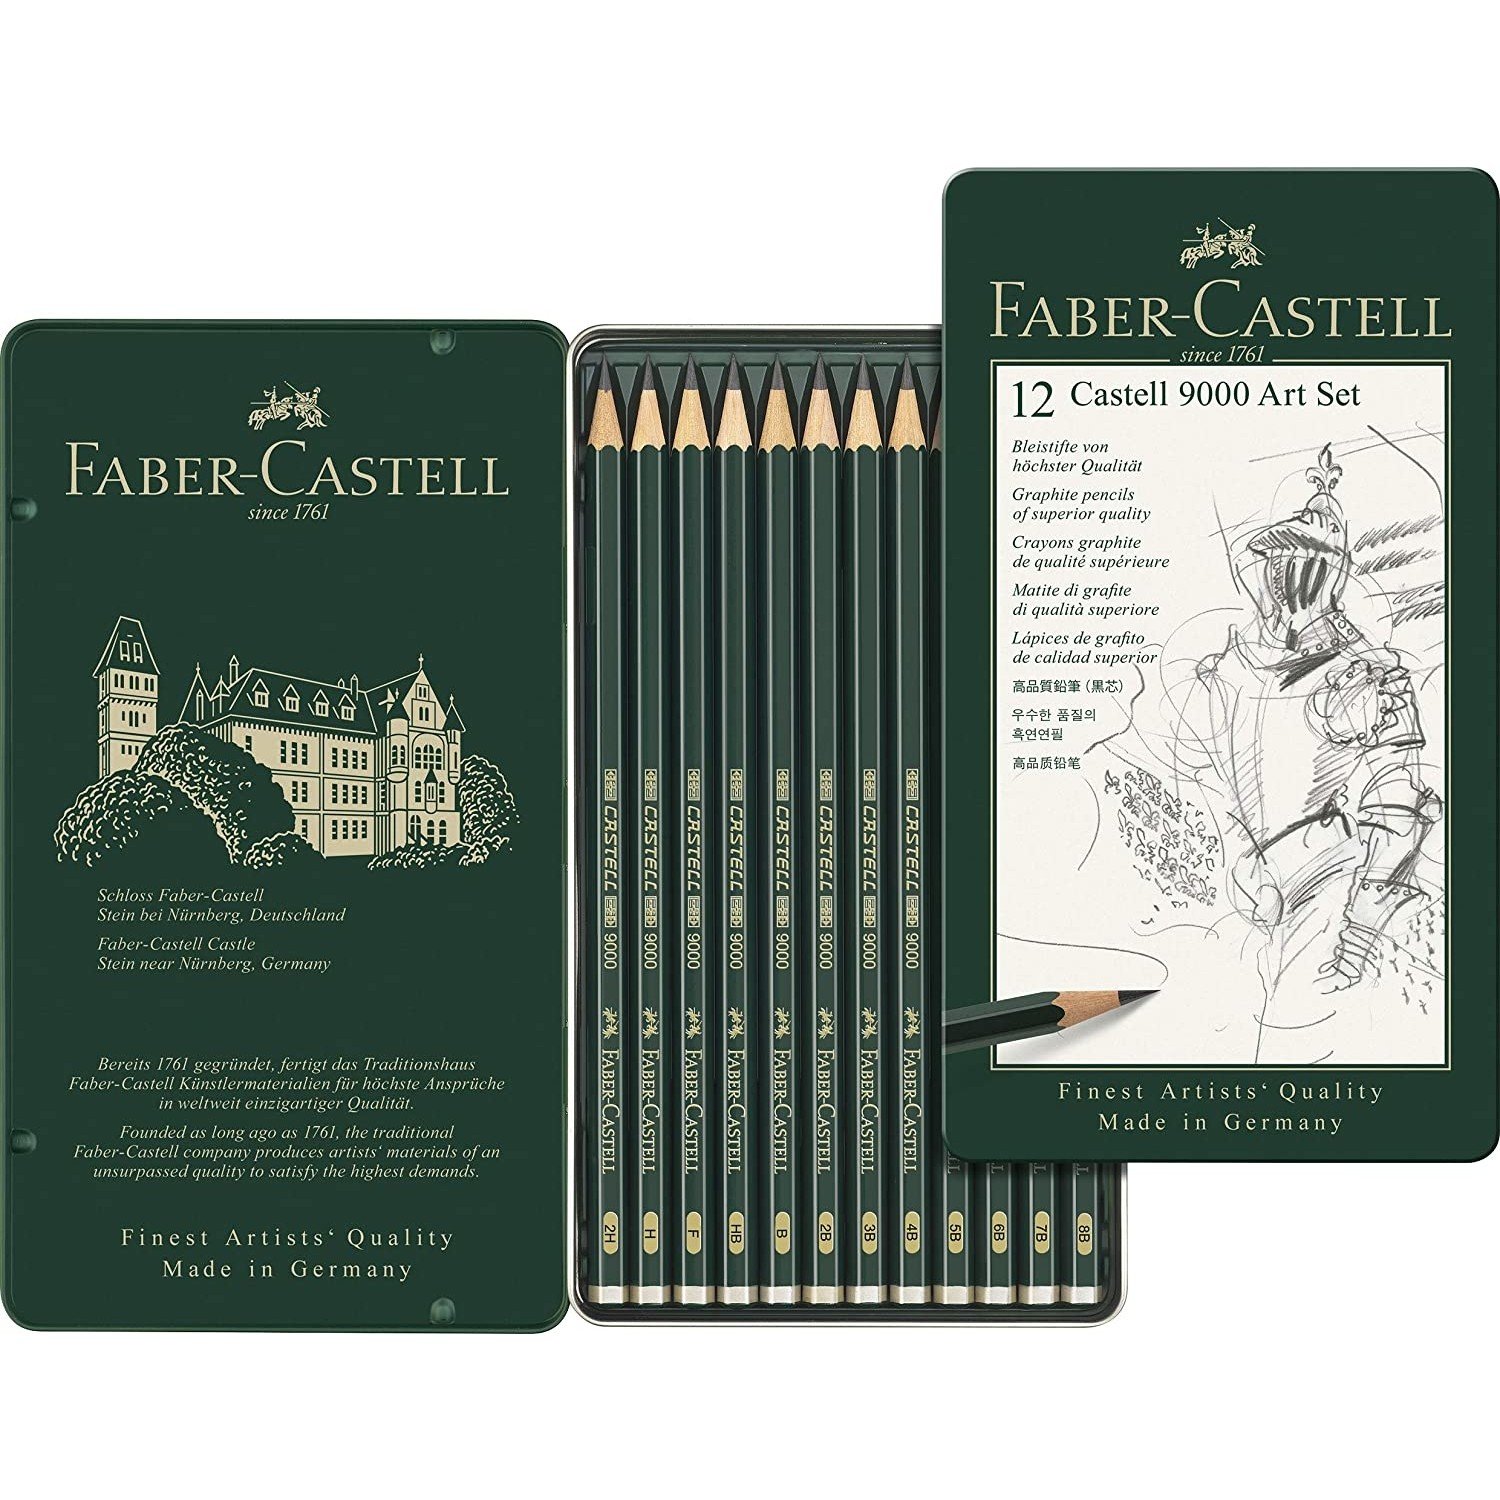 Faber Castell - Faber Casltell 9000 Dereceli Kurşun Kalemler Ve Setleri